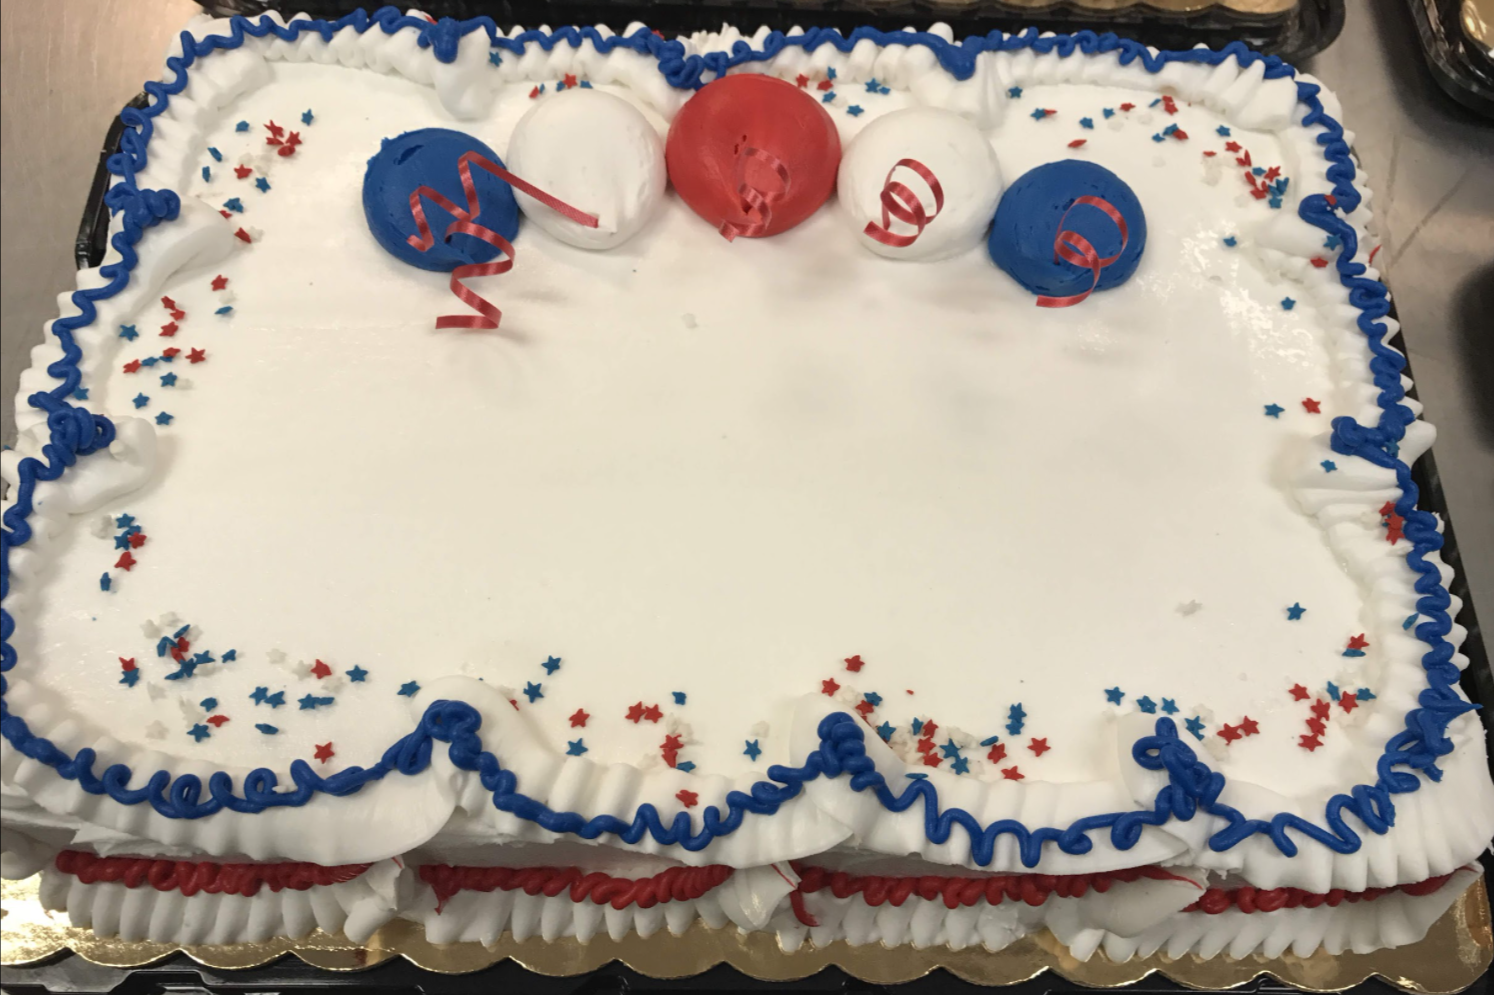 Birthday cake-flavored desserts across America